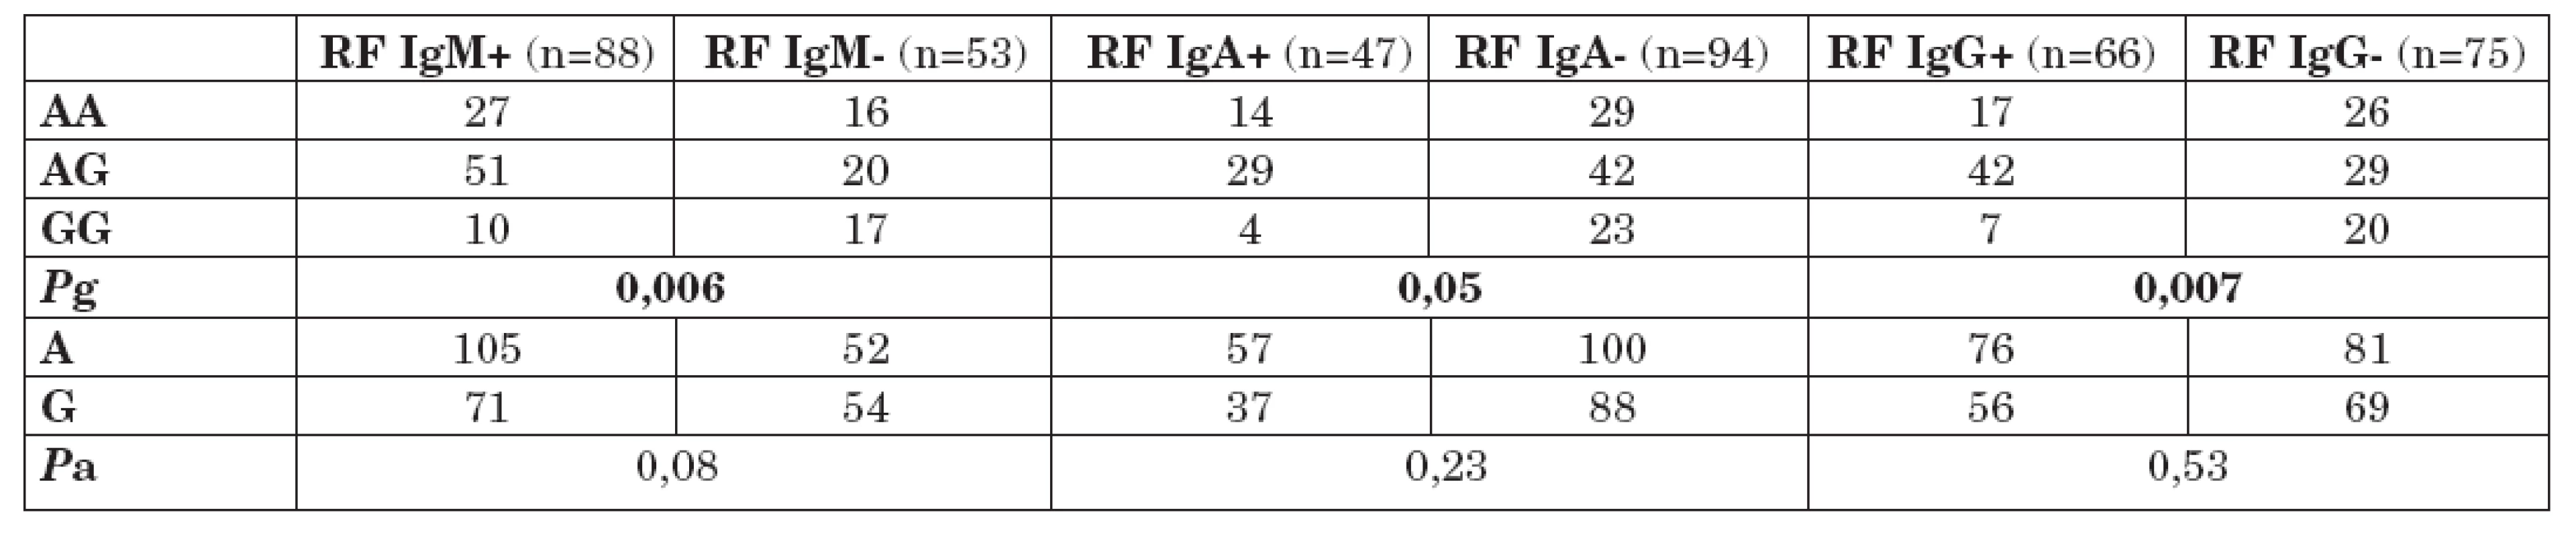 Distribuce genotypů a alelické frekvence polymorfismu -1082 G/A genu pro IL-10 u pacientů s RA s pozitivitou a negativitou RF IgM, IgA a IgG.